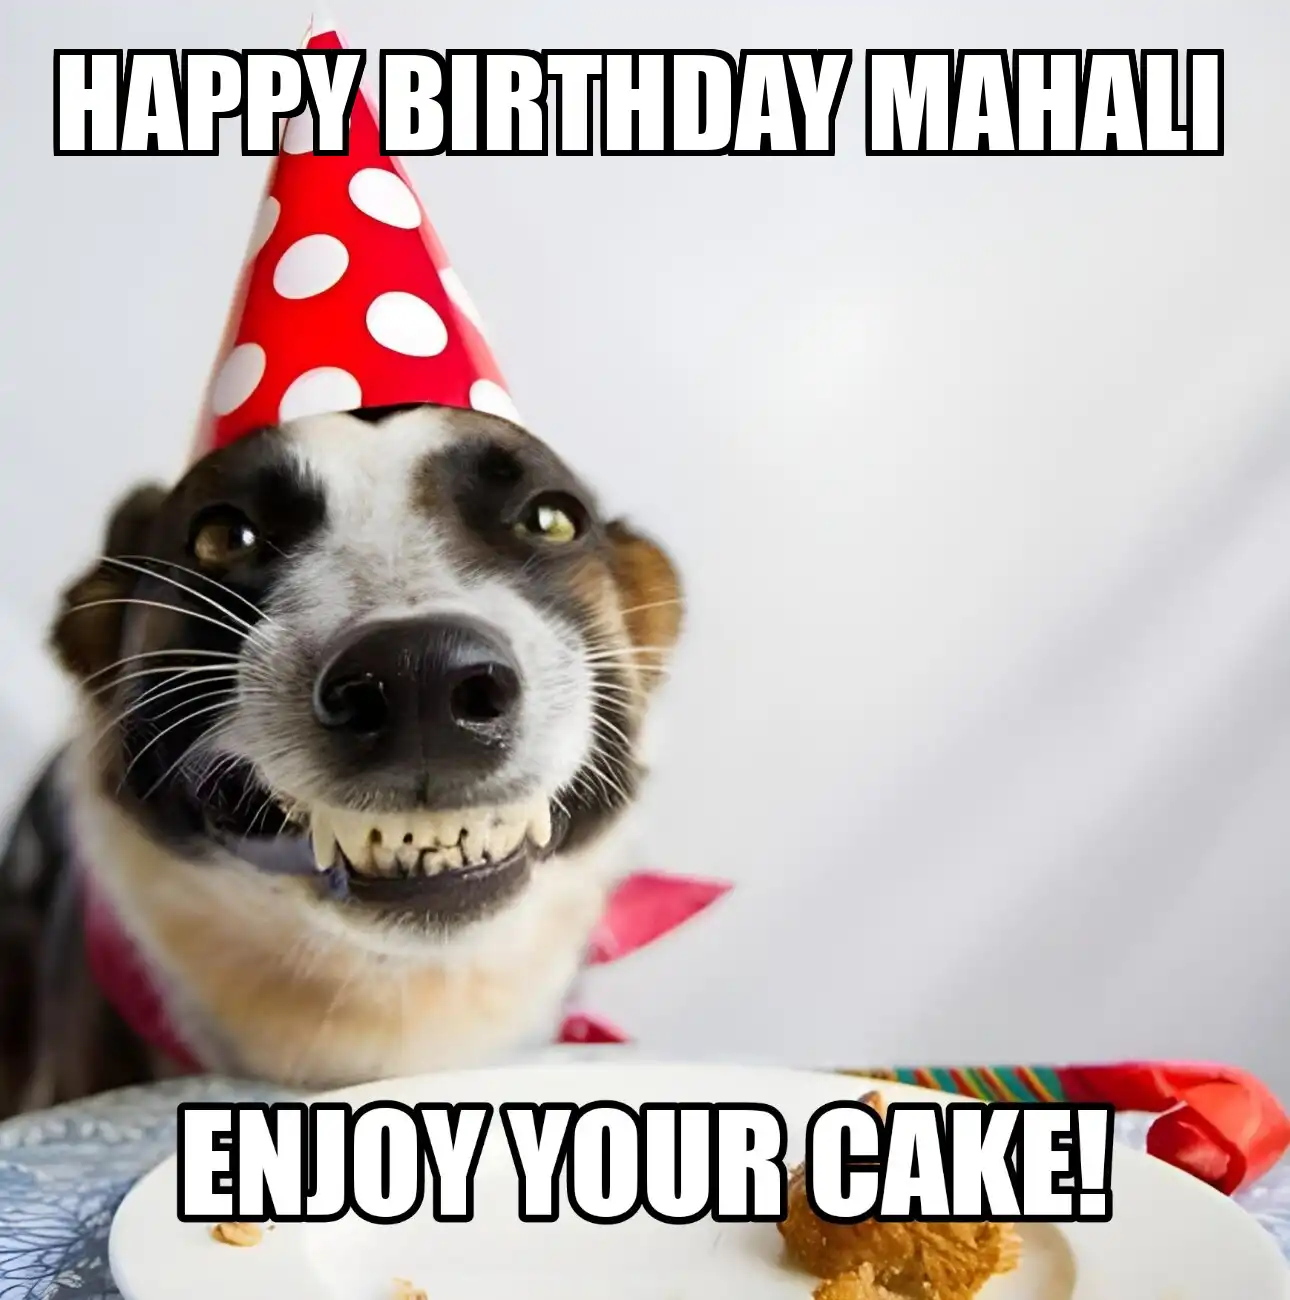 Happy Birthday Mahali Enjoy Your Cake Dog Meme